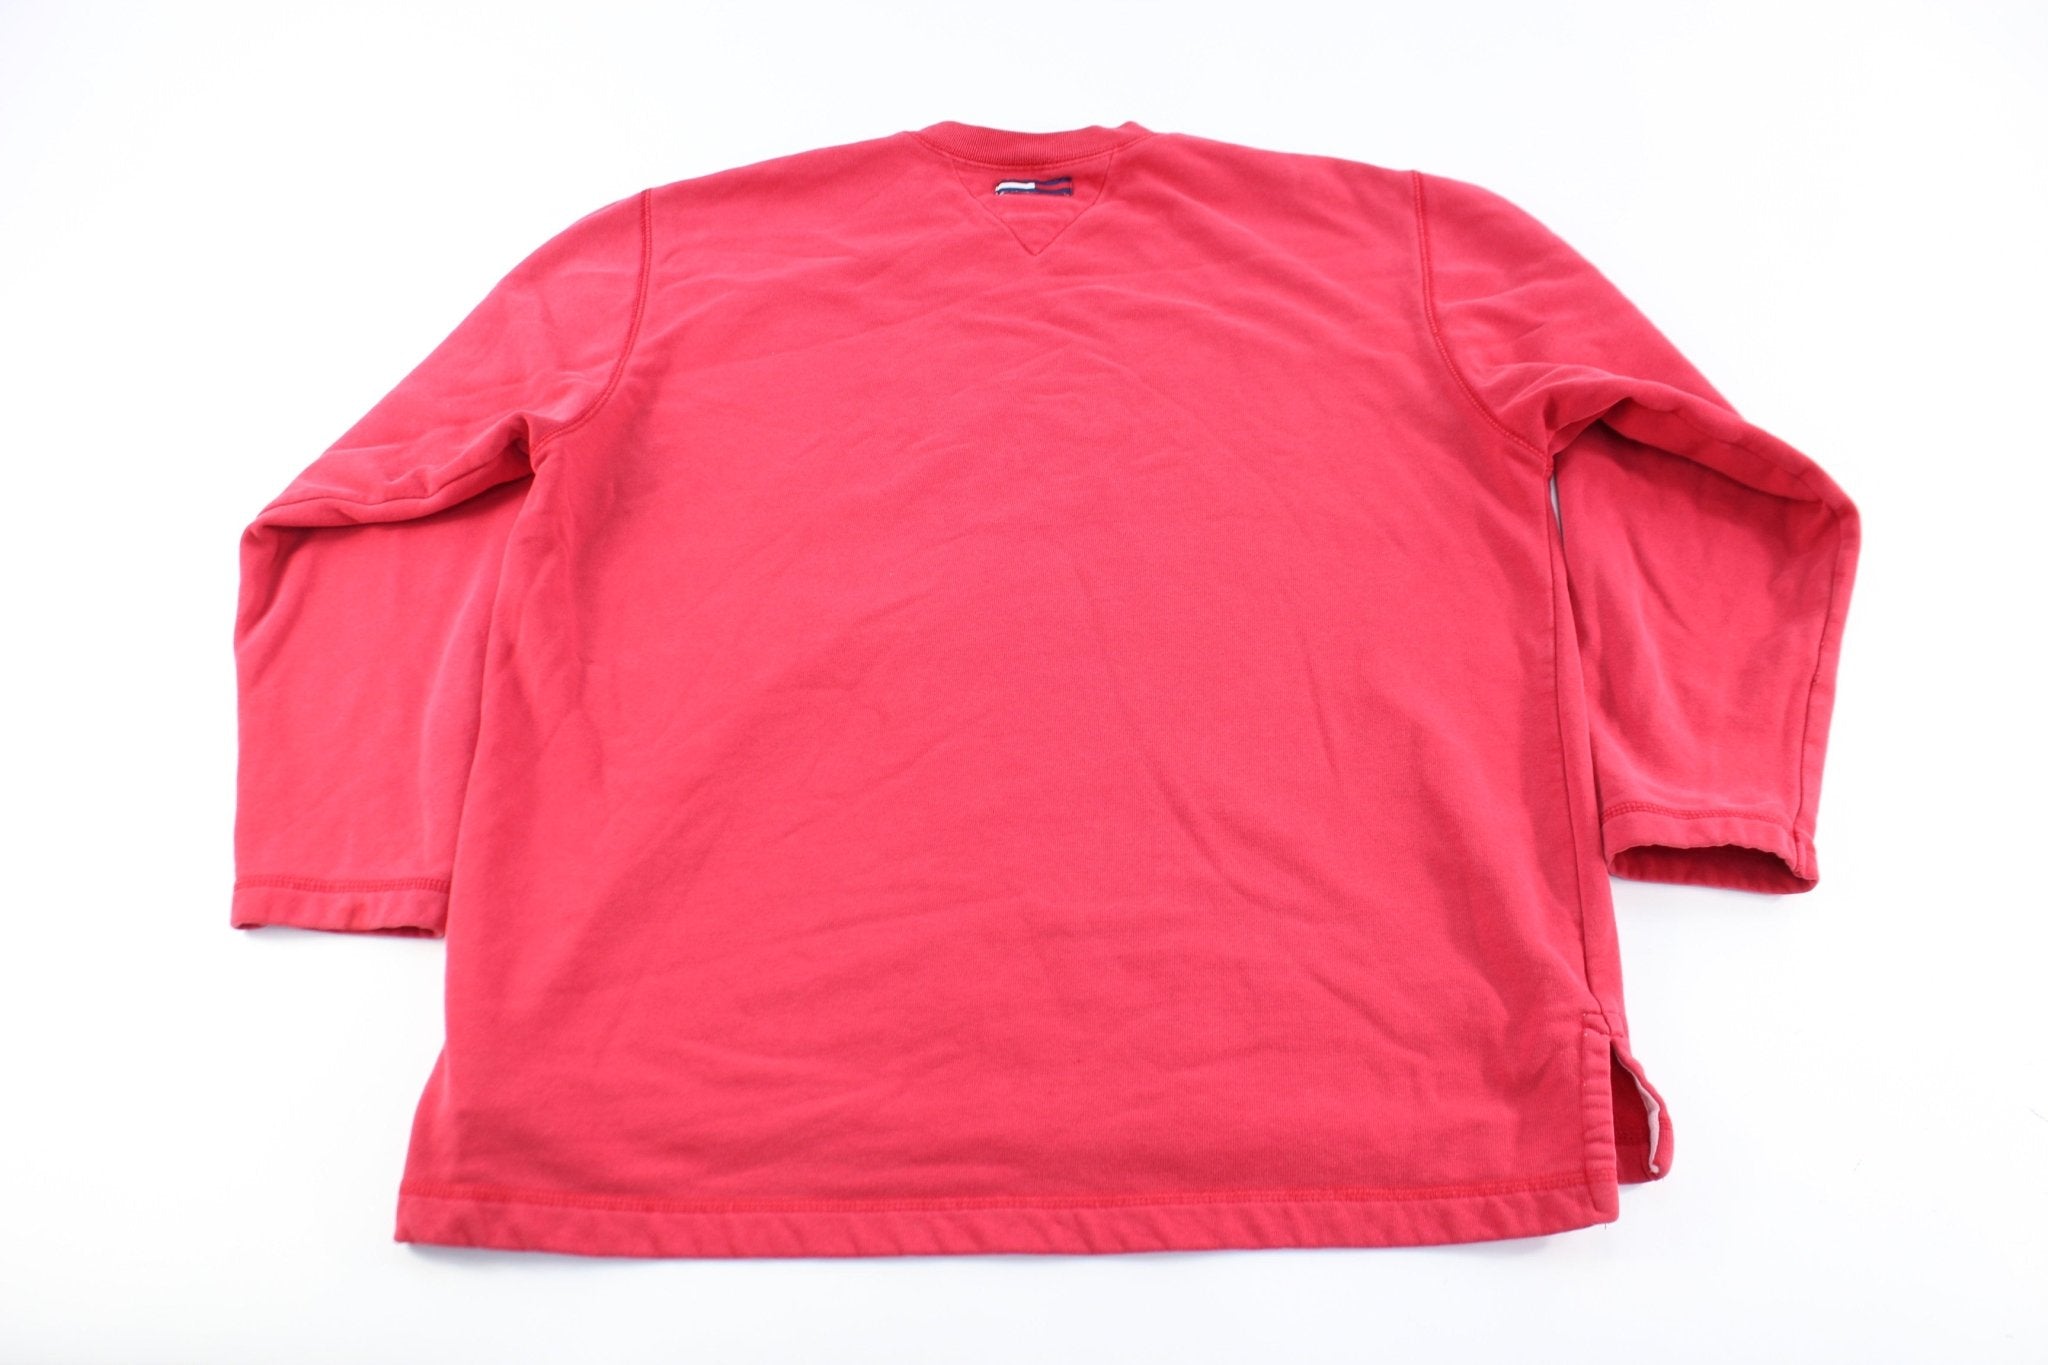 Tommy Hilfiger Embroidered Red Sweatshirt - ThriftedThreads.com